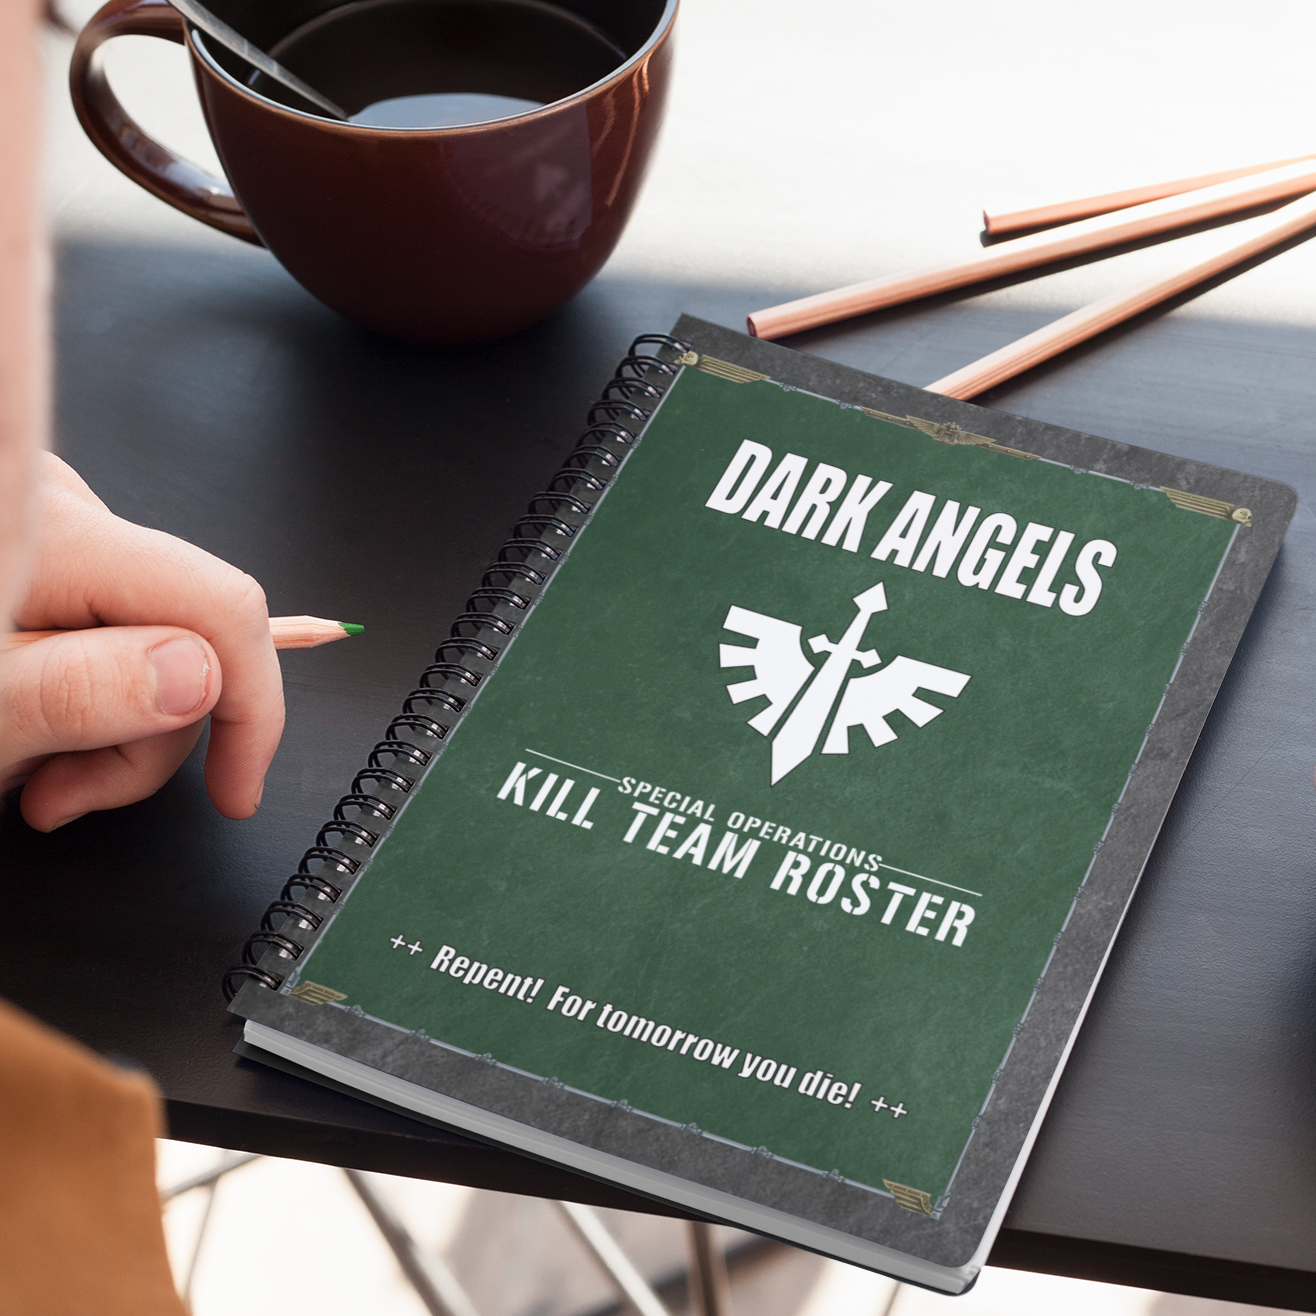 Dark Angels | Kill Team Roster | WH 40k